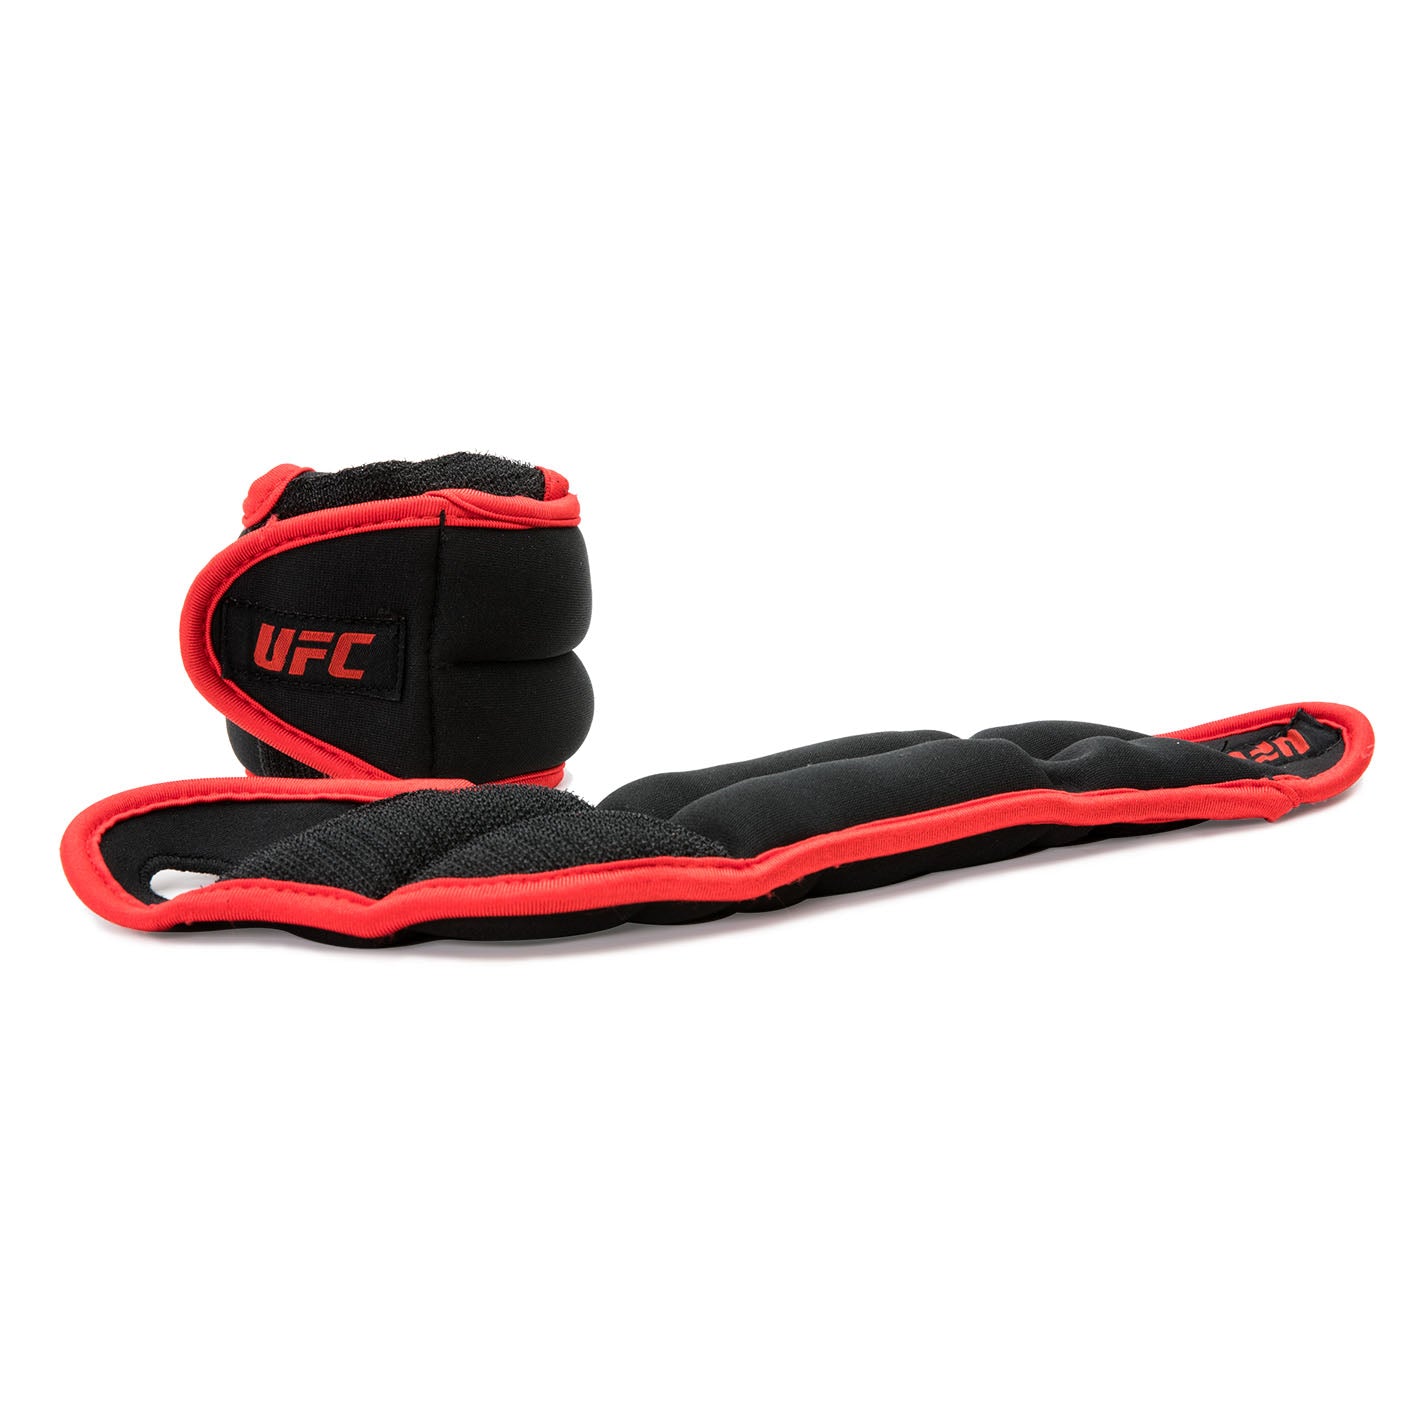 UFC Wrist Weights from Sweatband.com